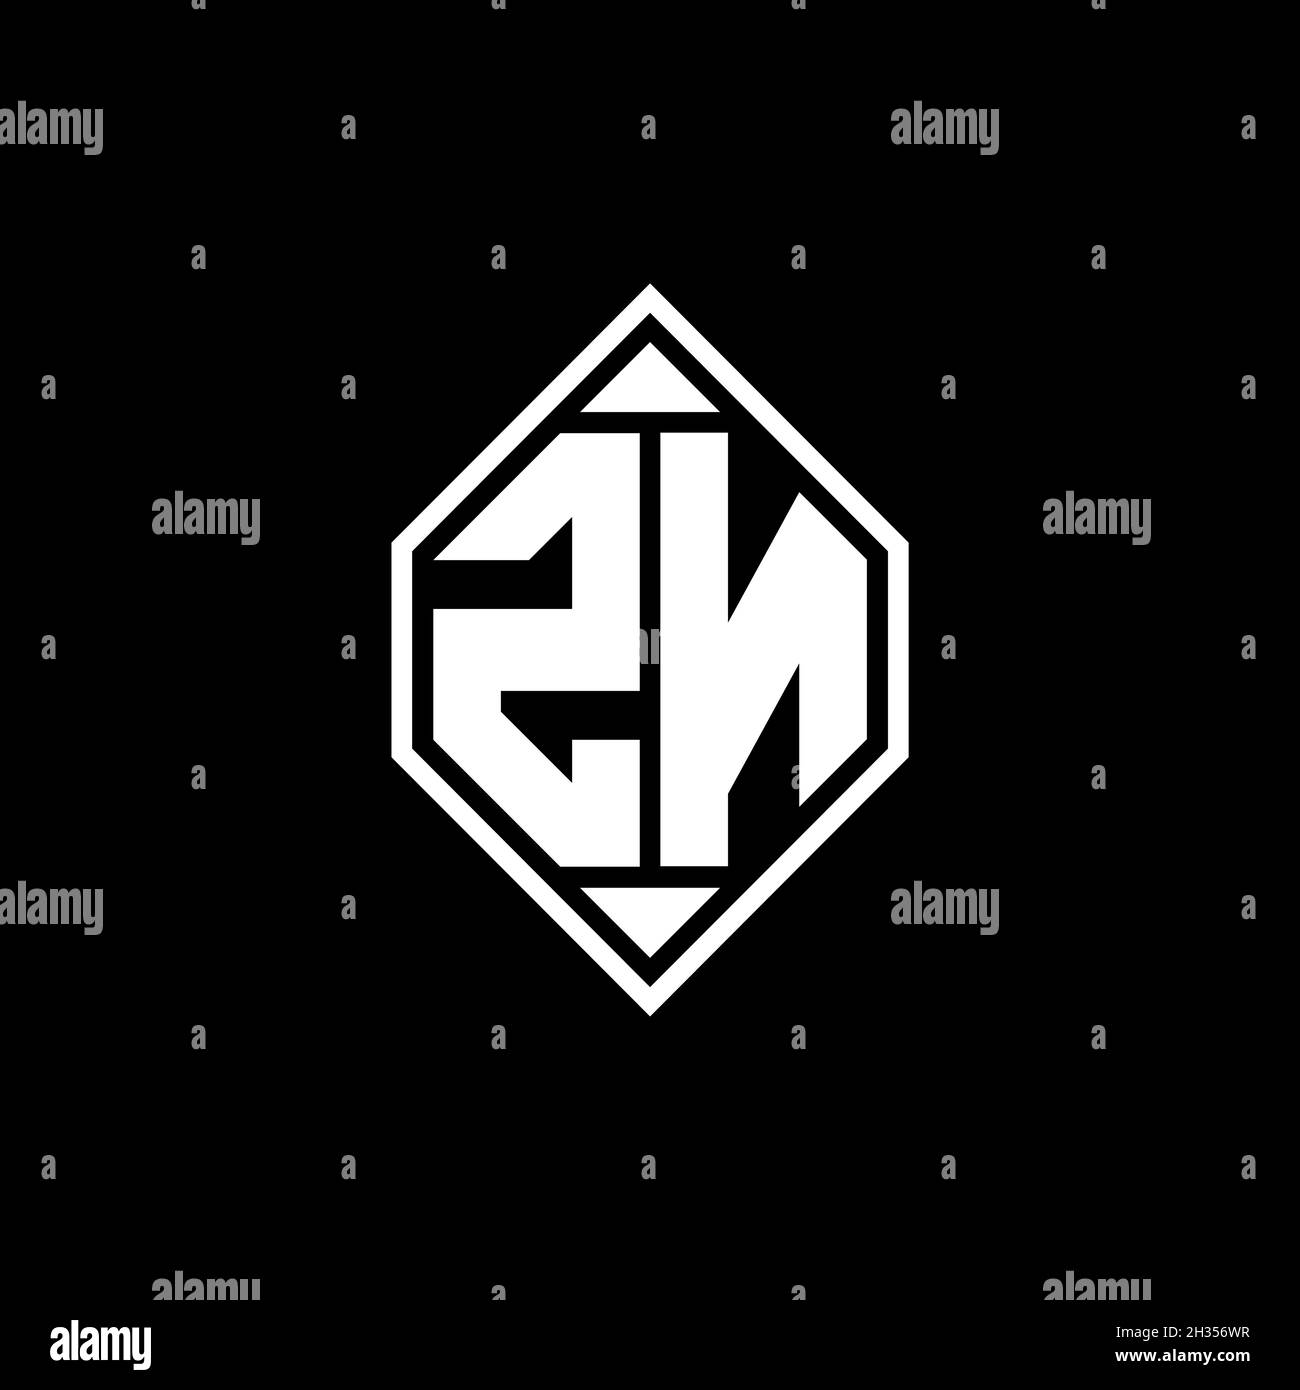 ZM Monogram logo letter with polygonal geometric shape style design isolated on white background. Star polygonal, shield star geometric. Stock Vector